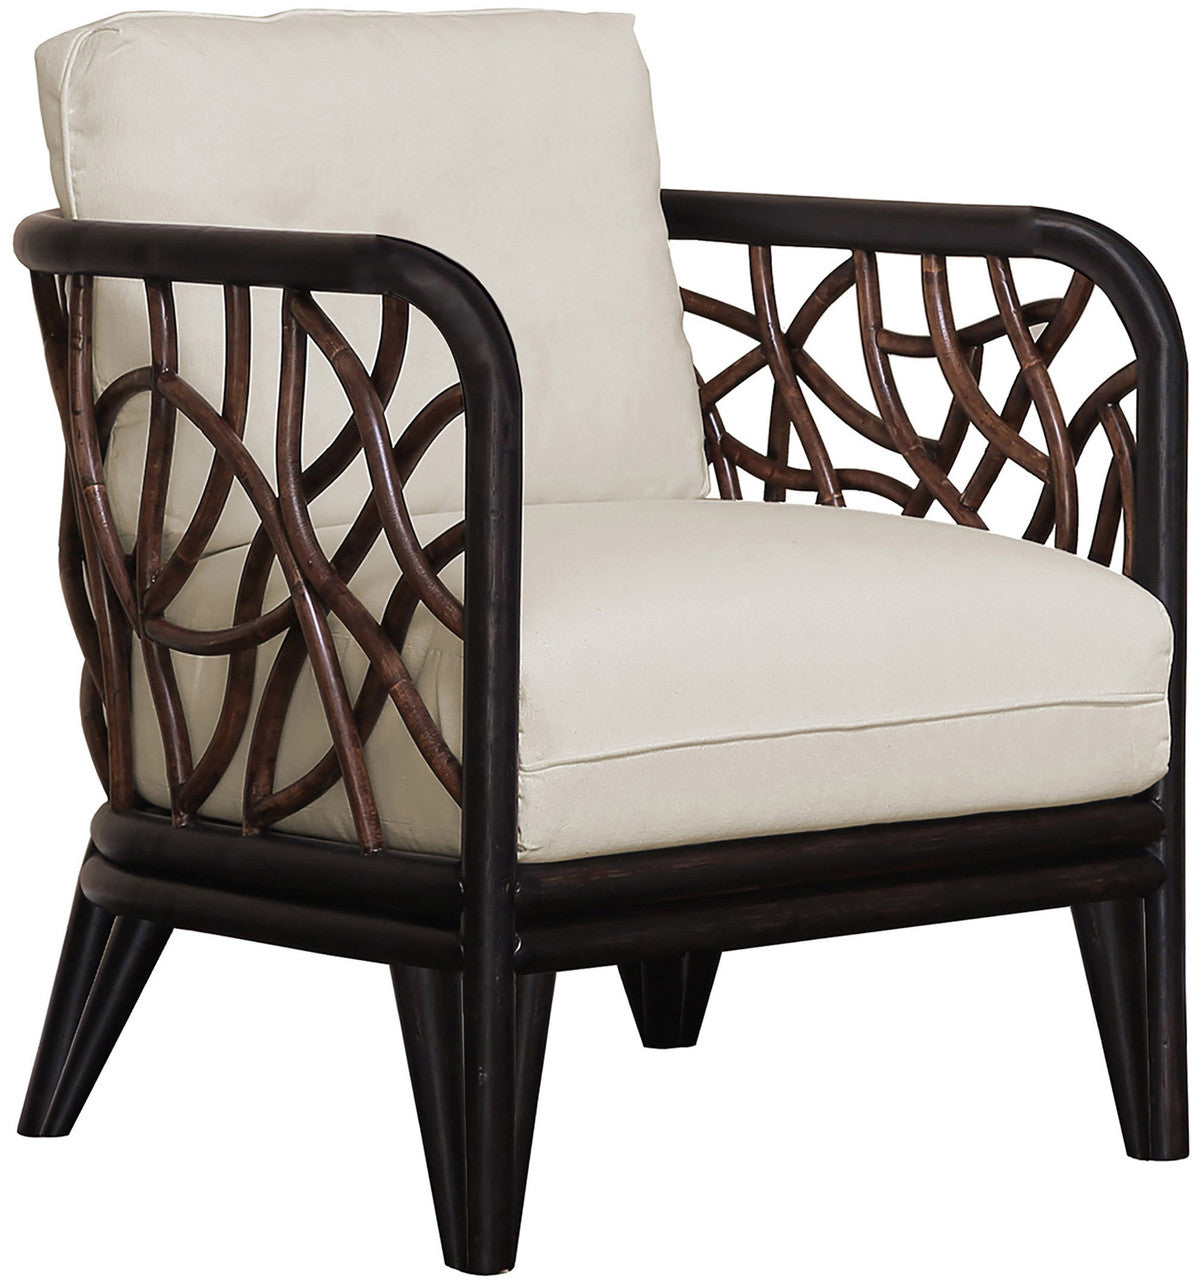 Panama Jack Trinidad Lounge Chair with Cushions